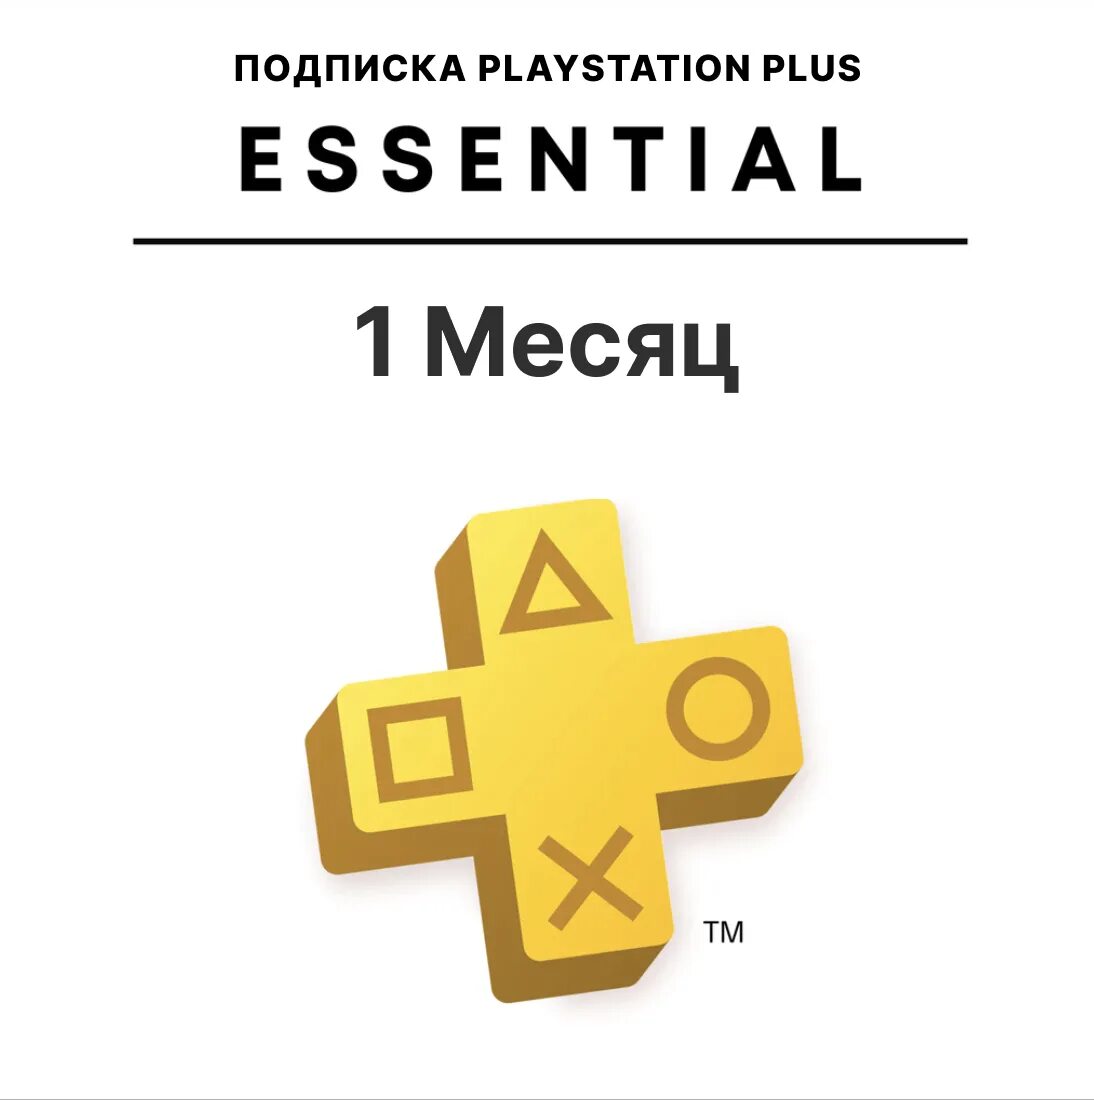 PLAYSTATION Plus Deluxe. PS Plus Essential 1 месяц. Подписка Extra PS Plus 1 month. PS Plus Essential Extra. Турецкая подписка ps5 купить